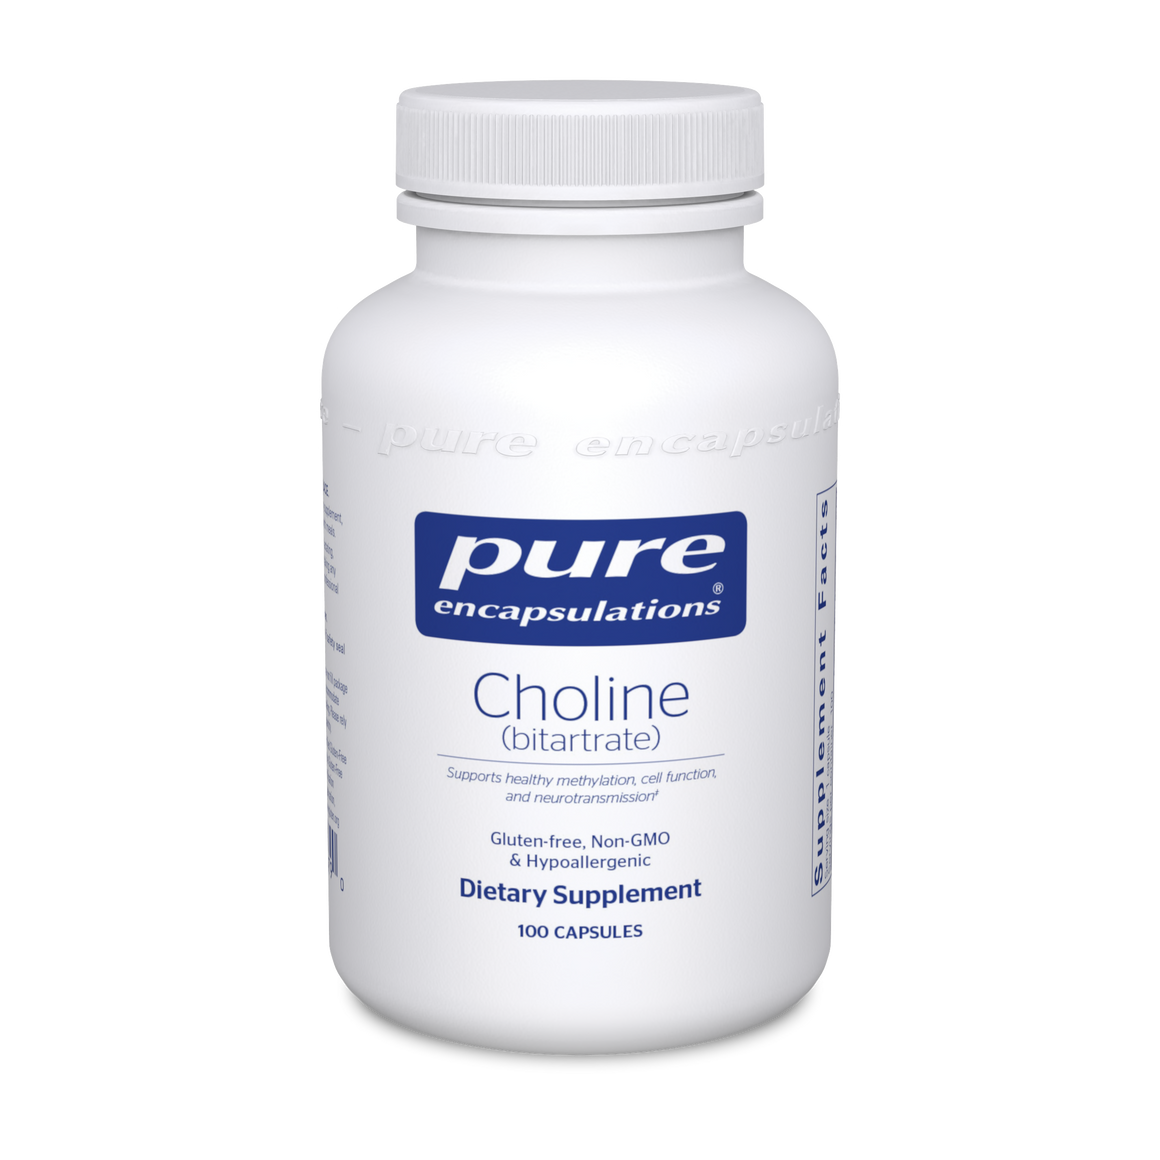 Choline (bitartrate) - Pure Encapsulations - 60 capsules